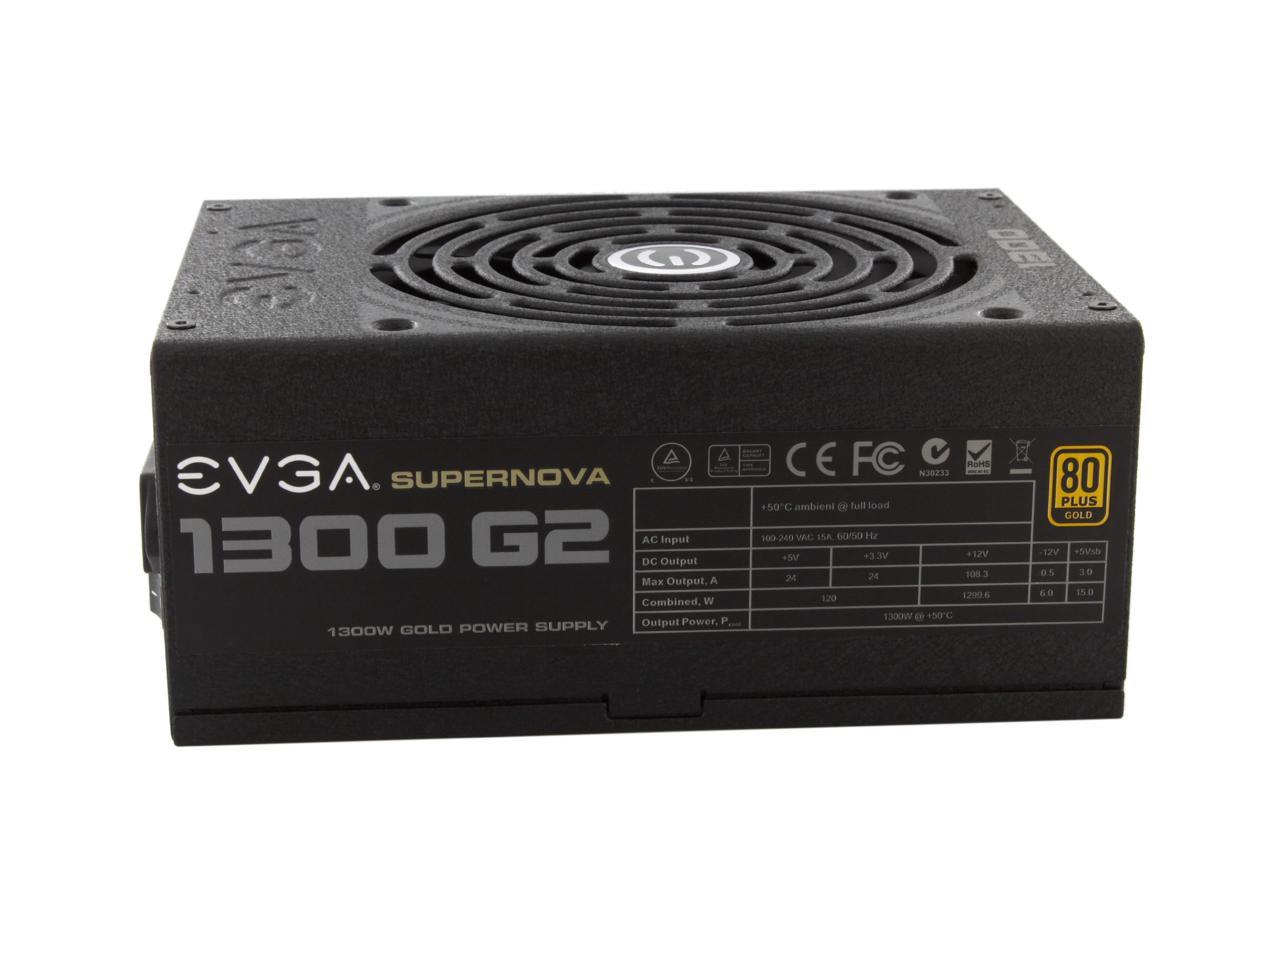 EVGA SuperNOVA 1300 G2 (120-G2-1300-XR) 80+ GOLD Certified 1300W 